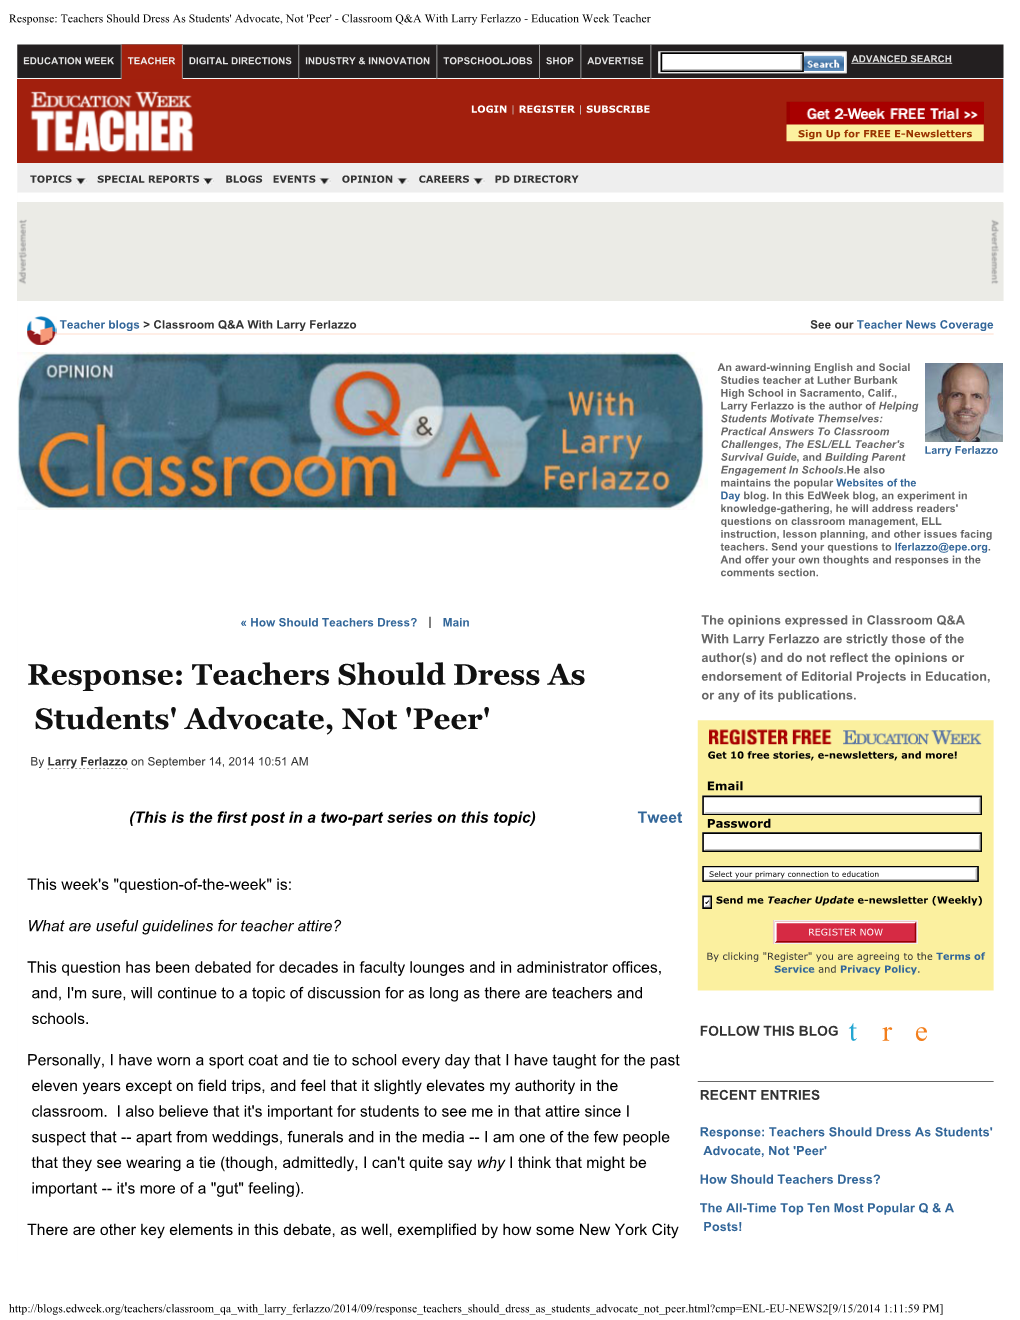 Teachers Should Dress As Students' Advocate, Not 'Peer' - Classroom Q&A with Larry Ferlazzo - Education Week Teacher